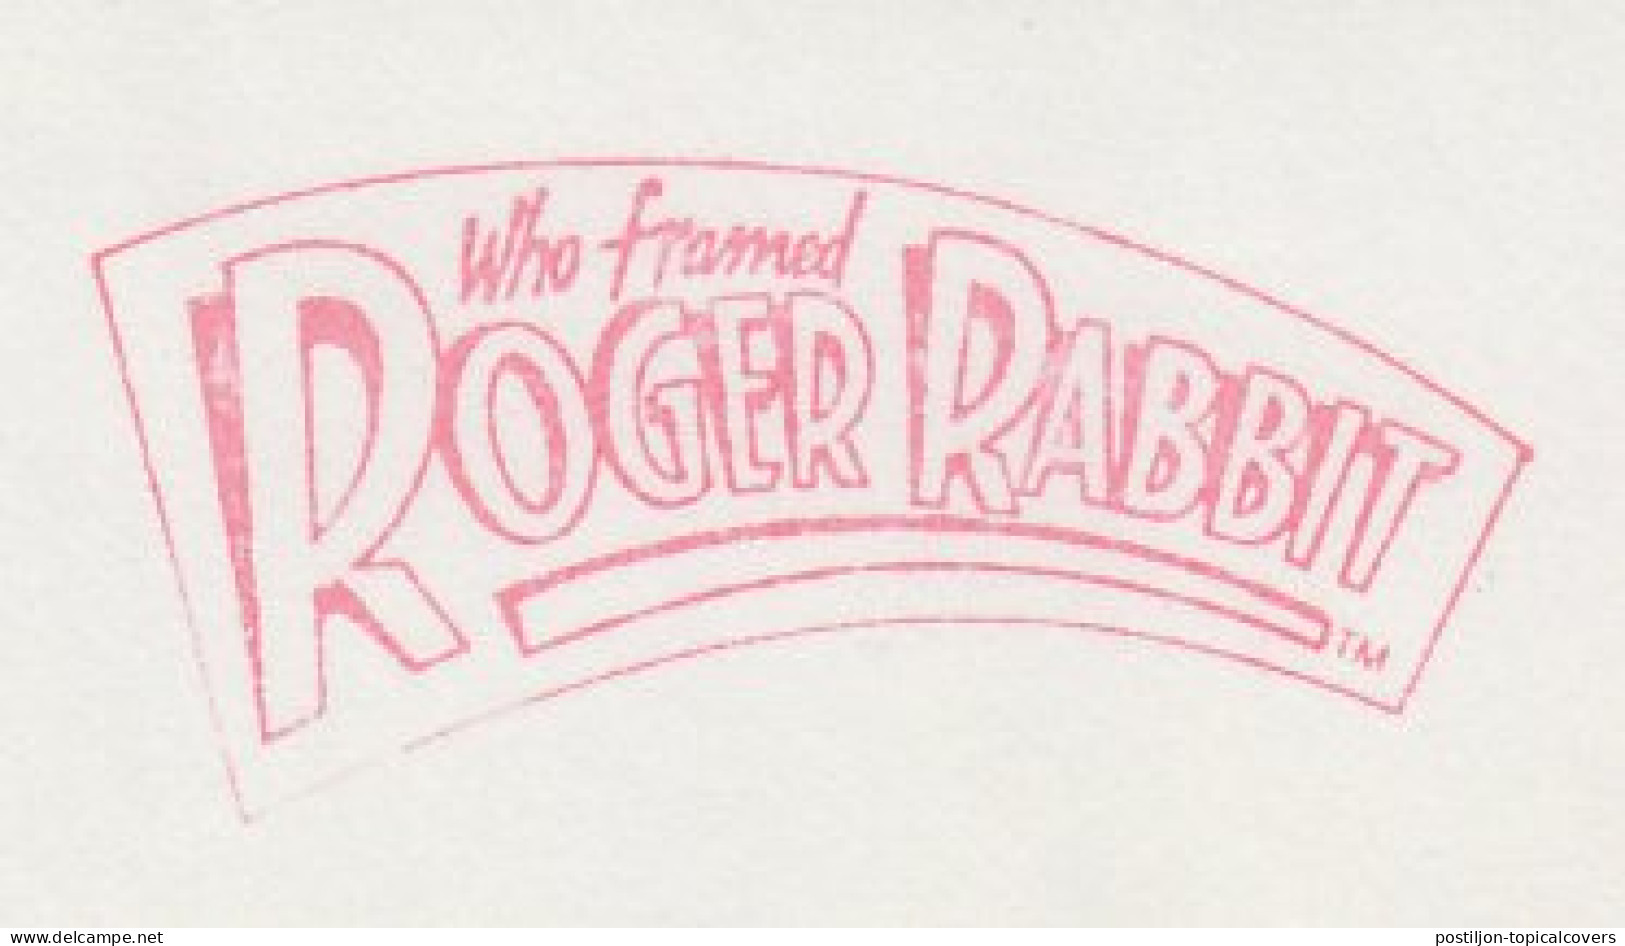 Meter Cut Netherlands 1989 Who Framed Roger Rabbit - Movie - Kino